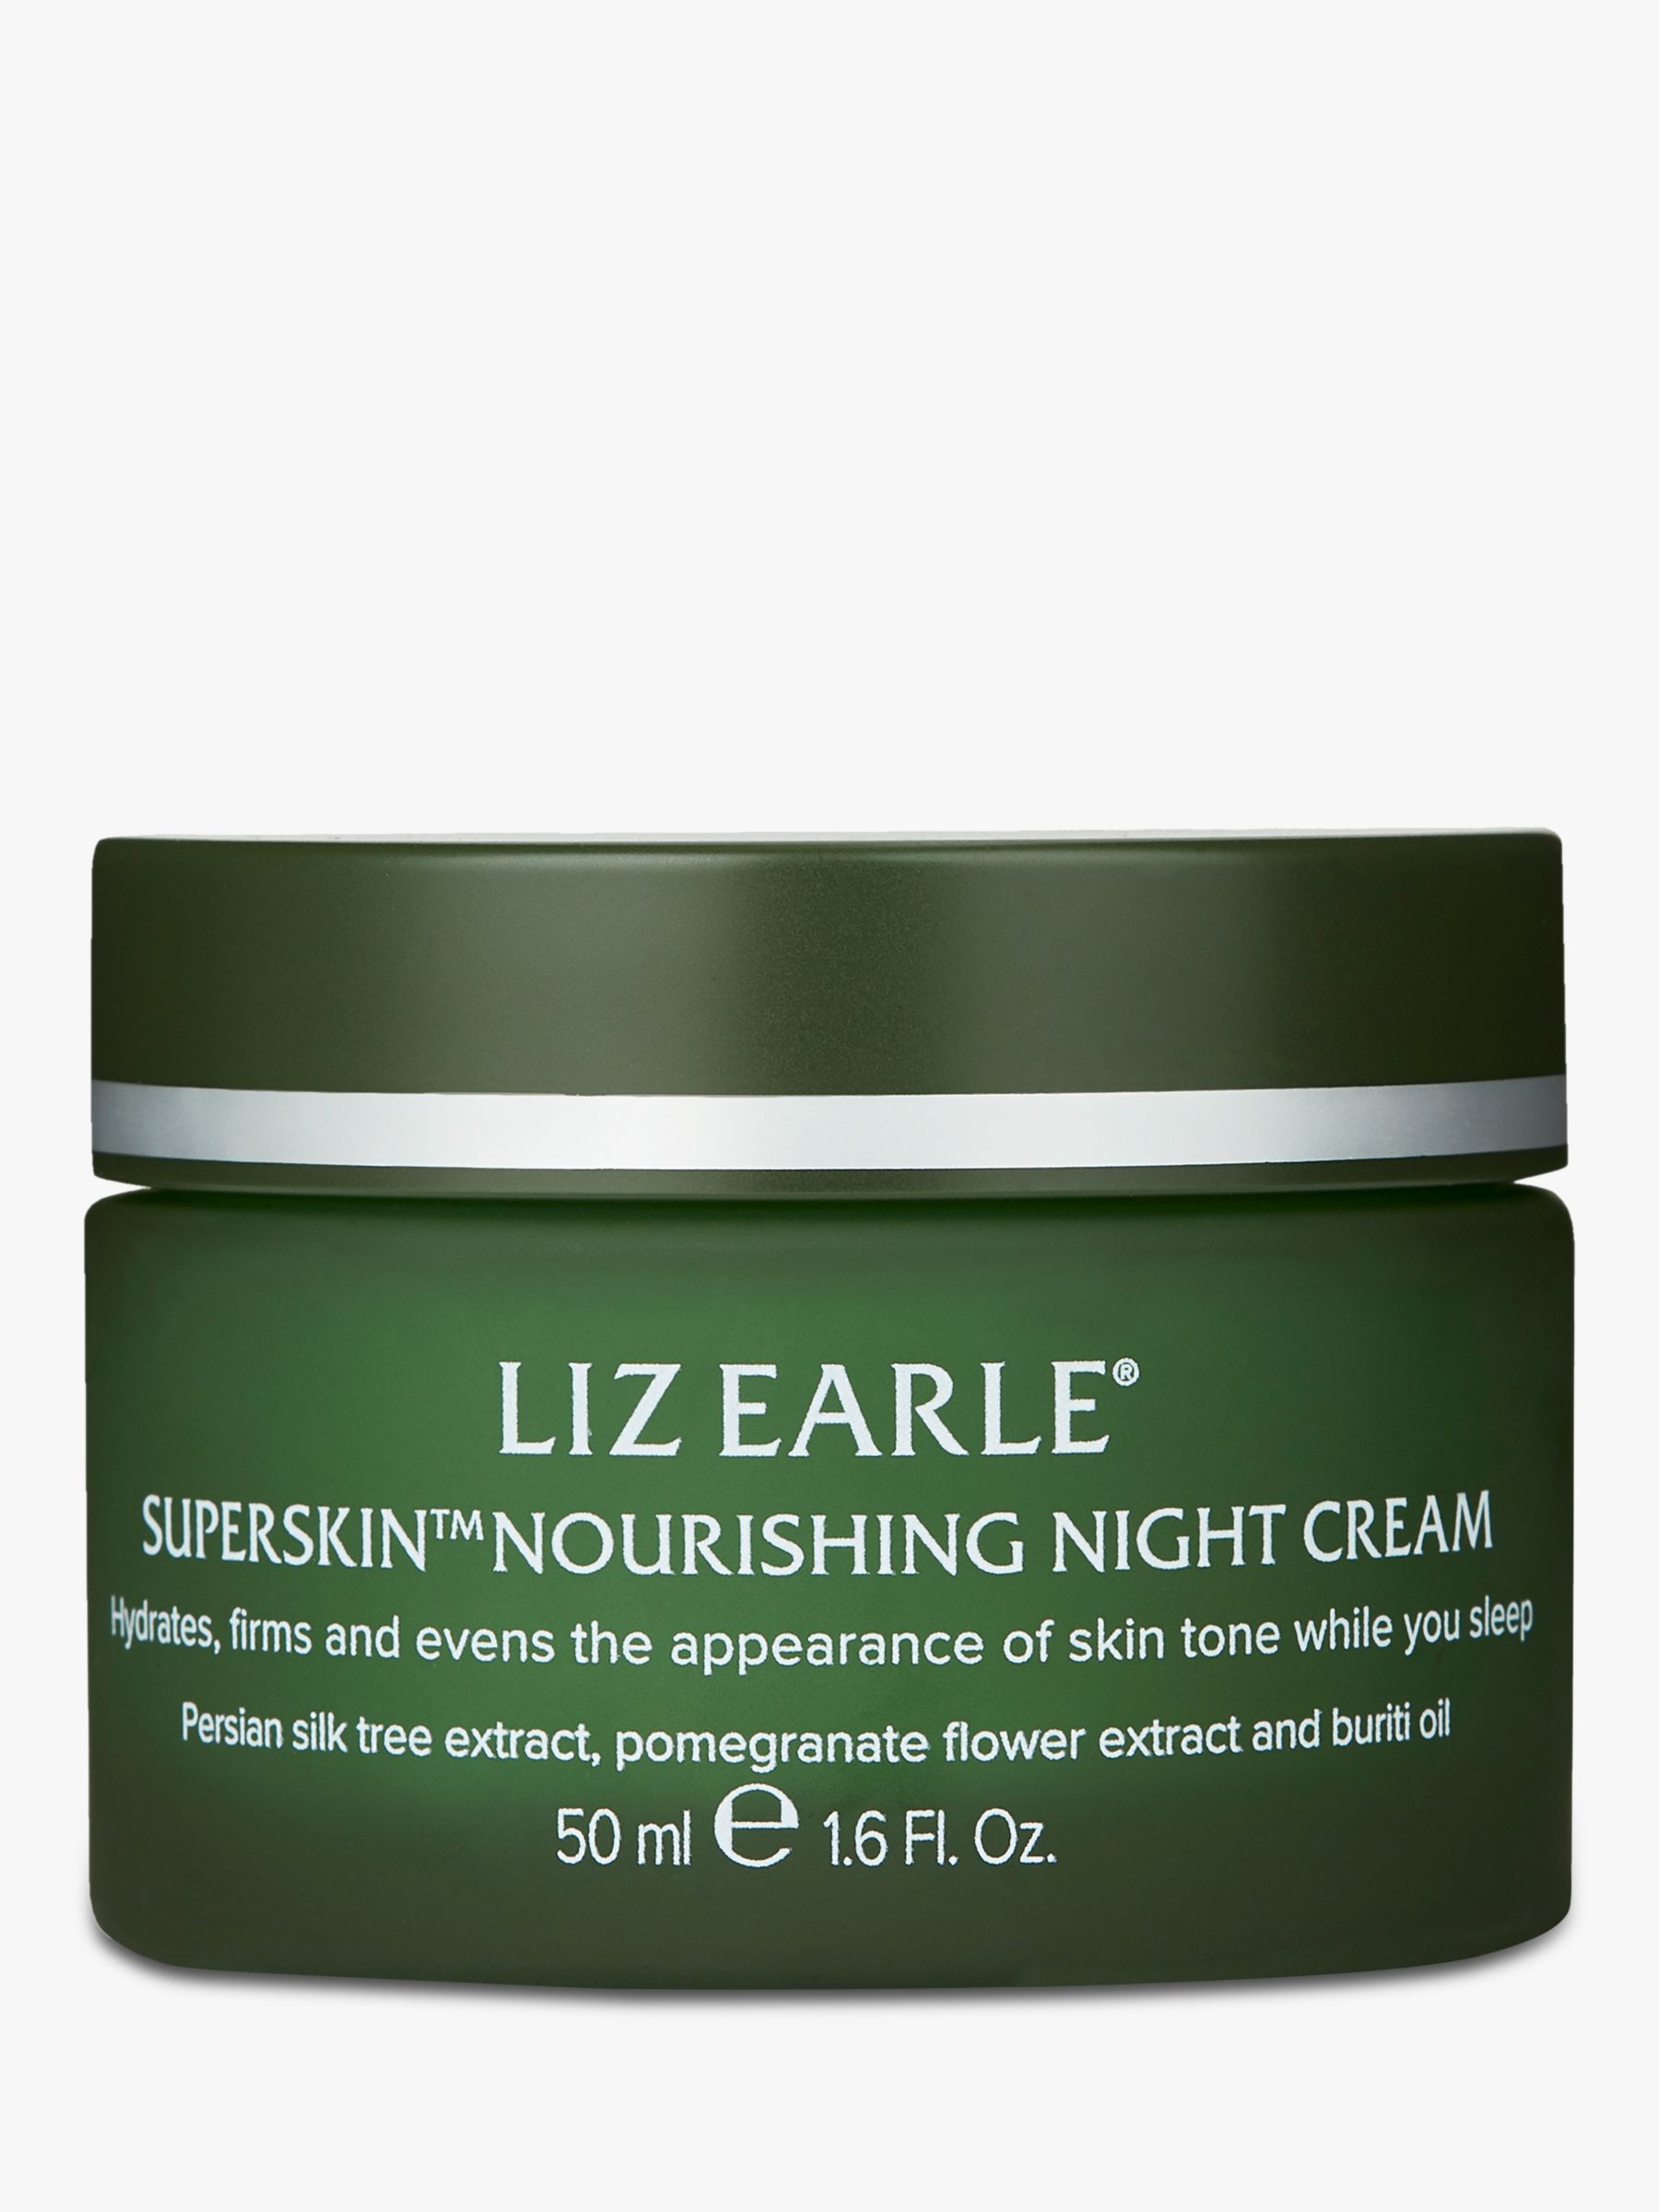 Liz Earle Superskin™ Nourishing Night Cream Jar, 50ml